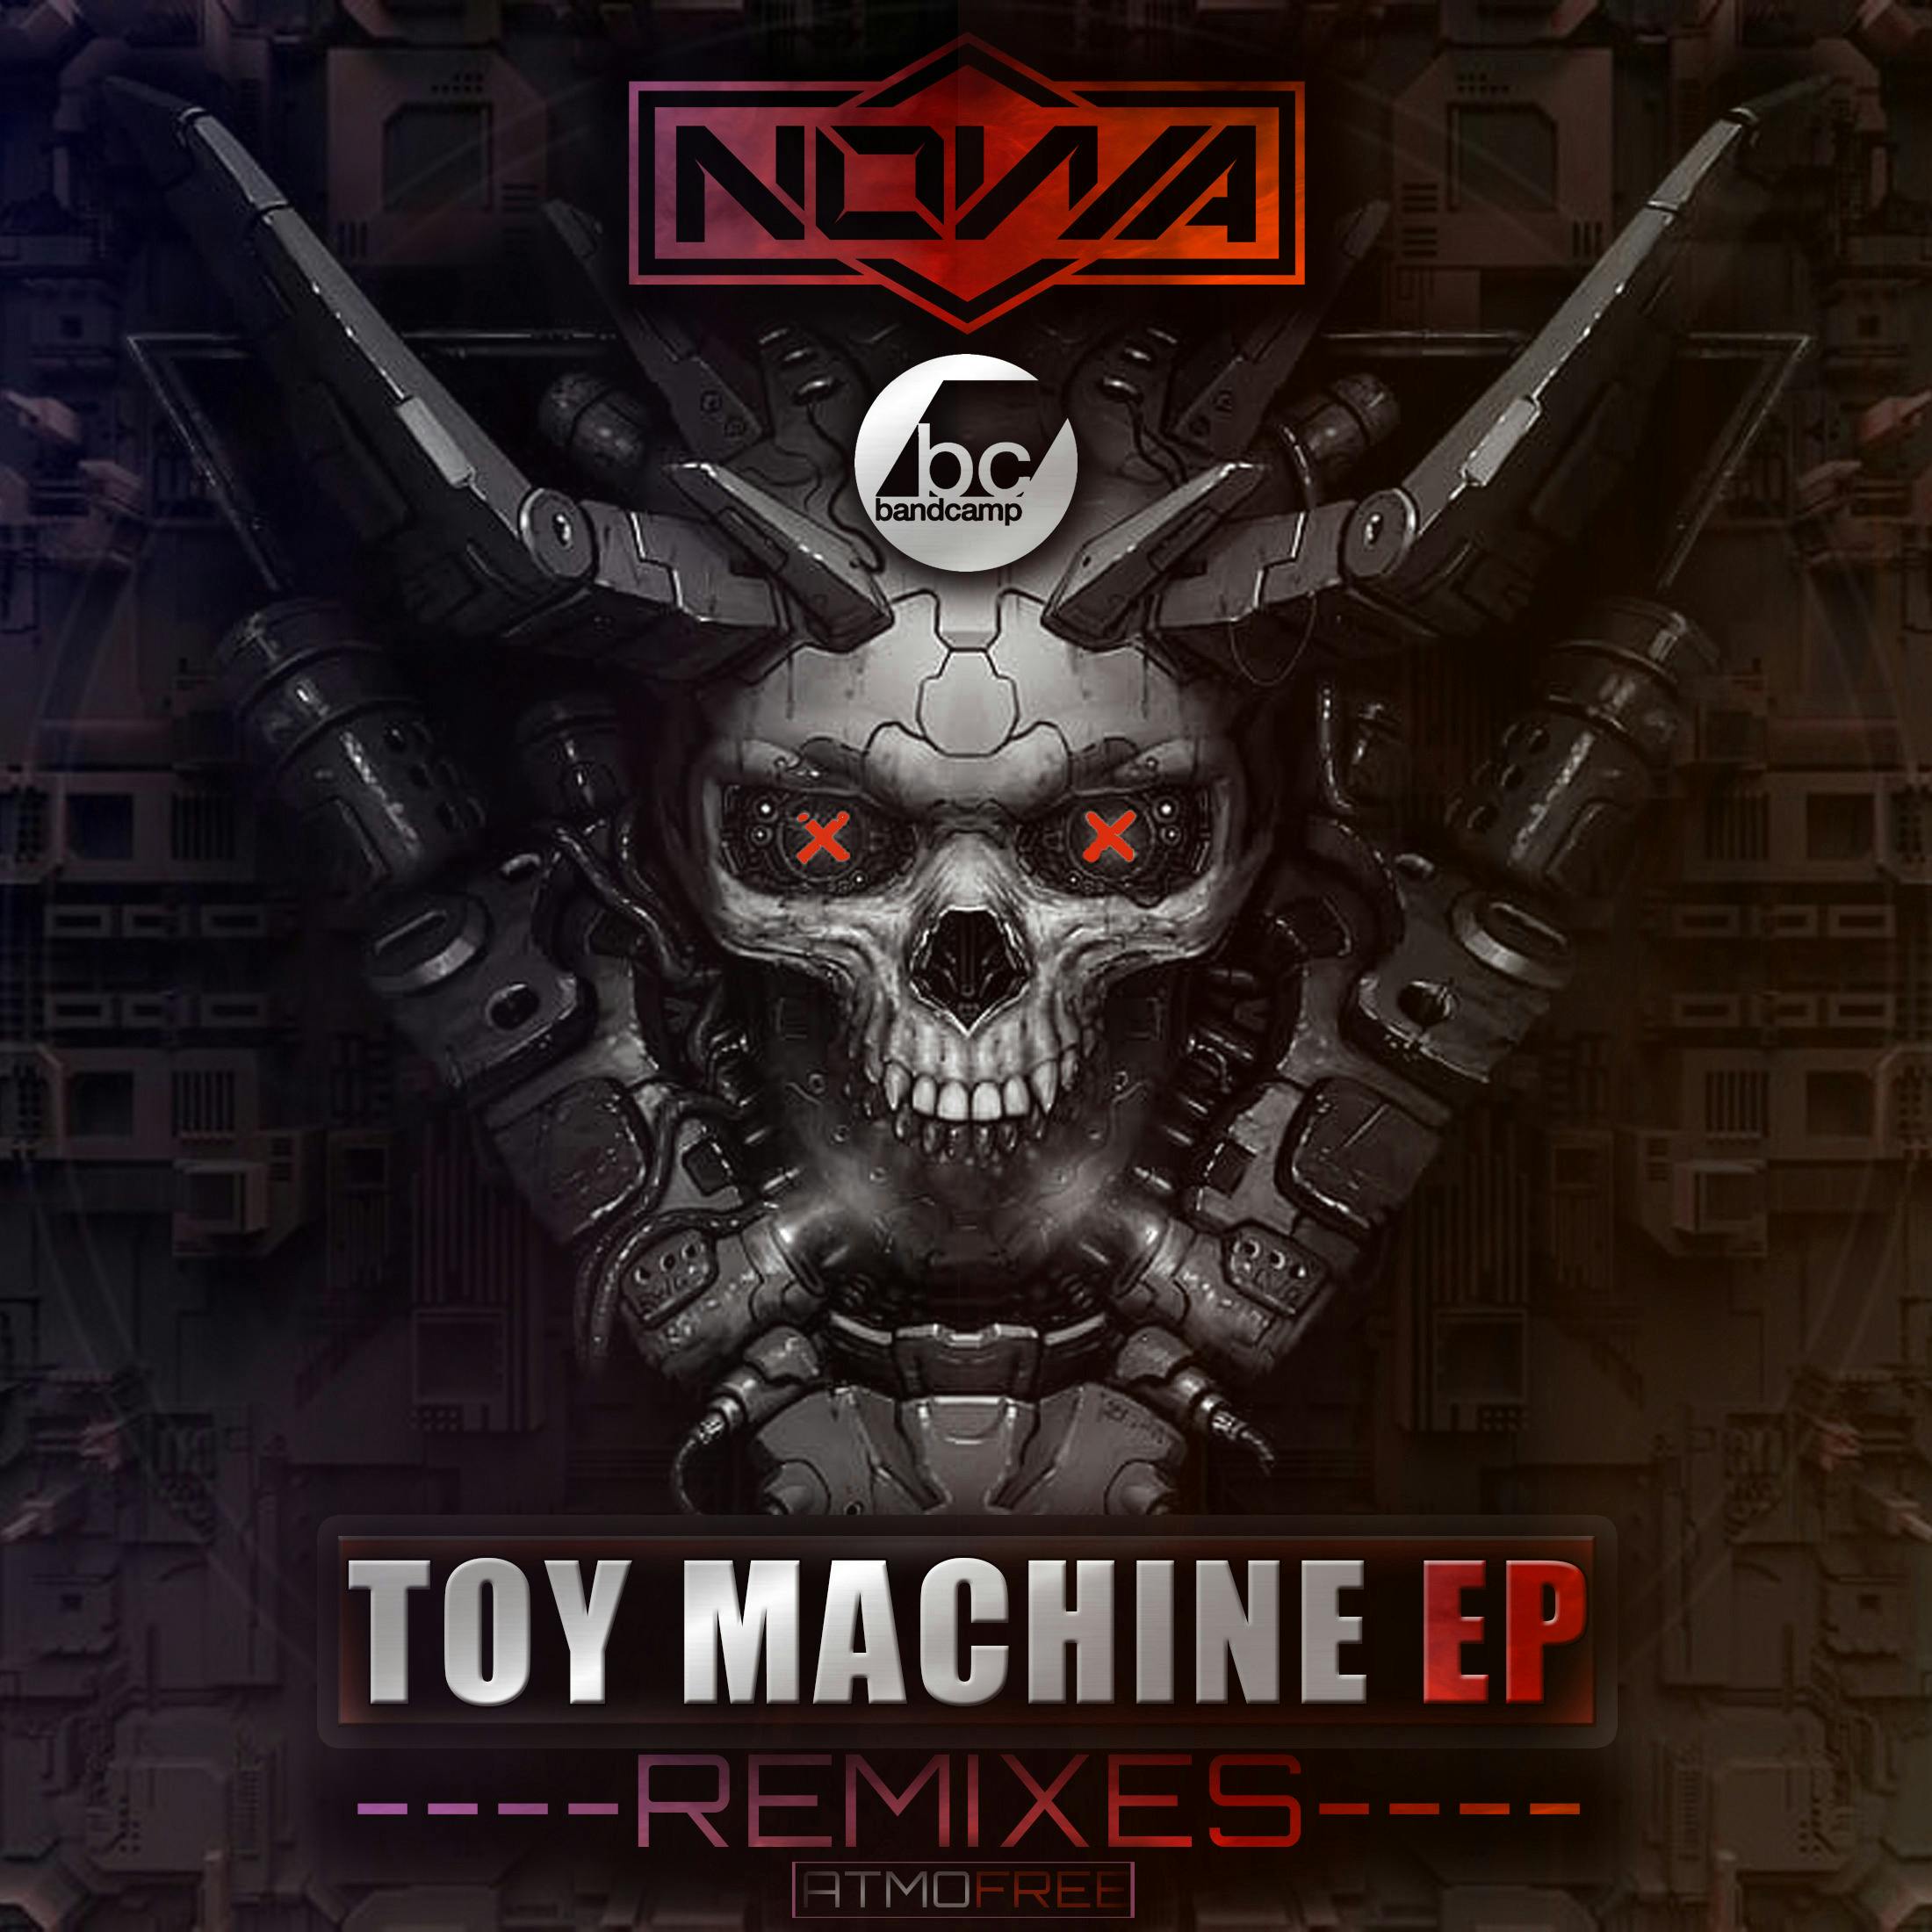 Nowa - Toy Machine (Terra Remix)